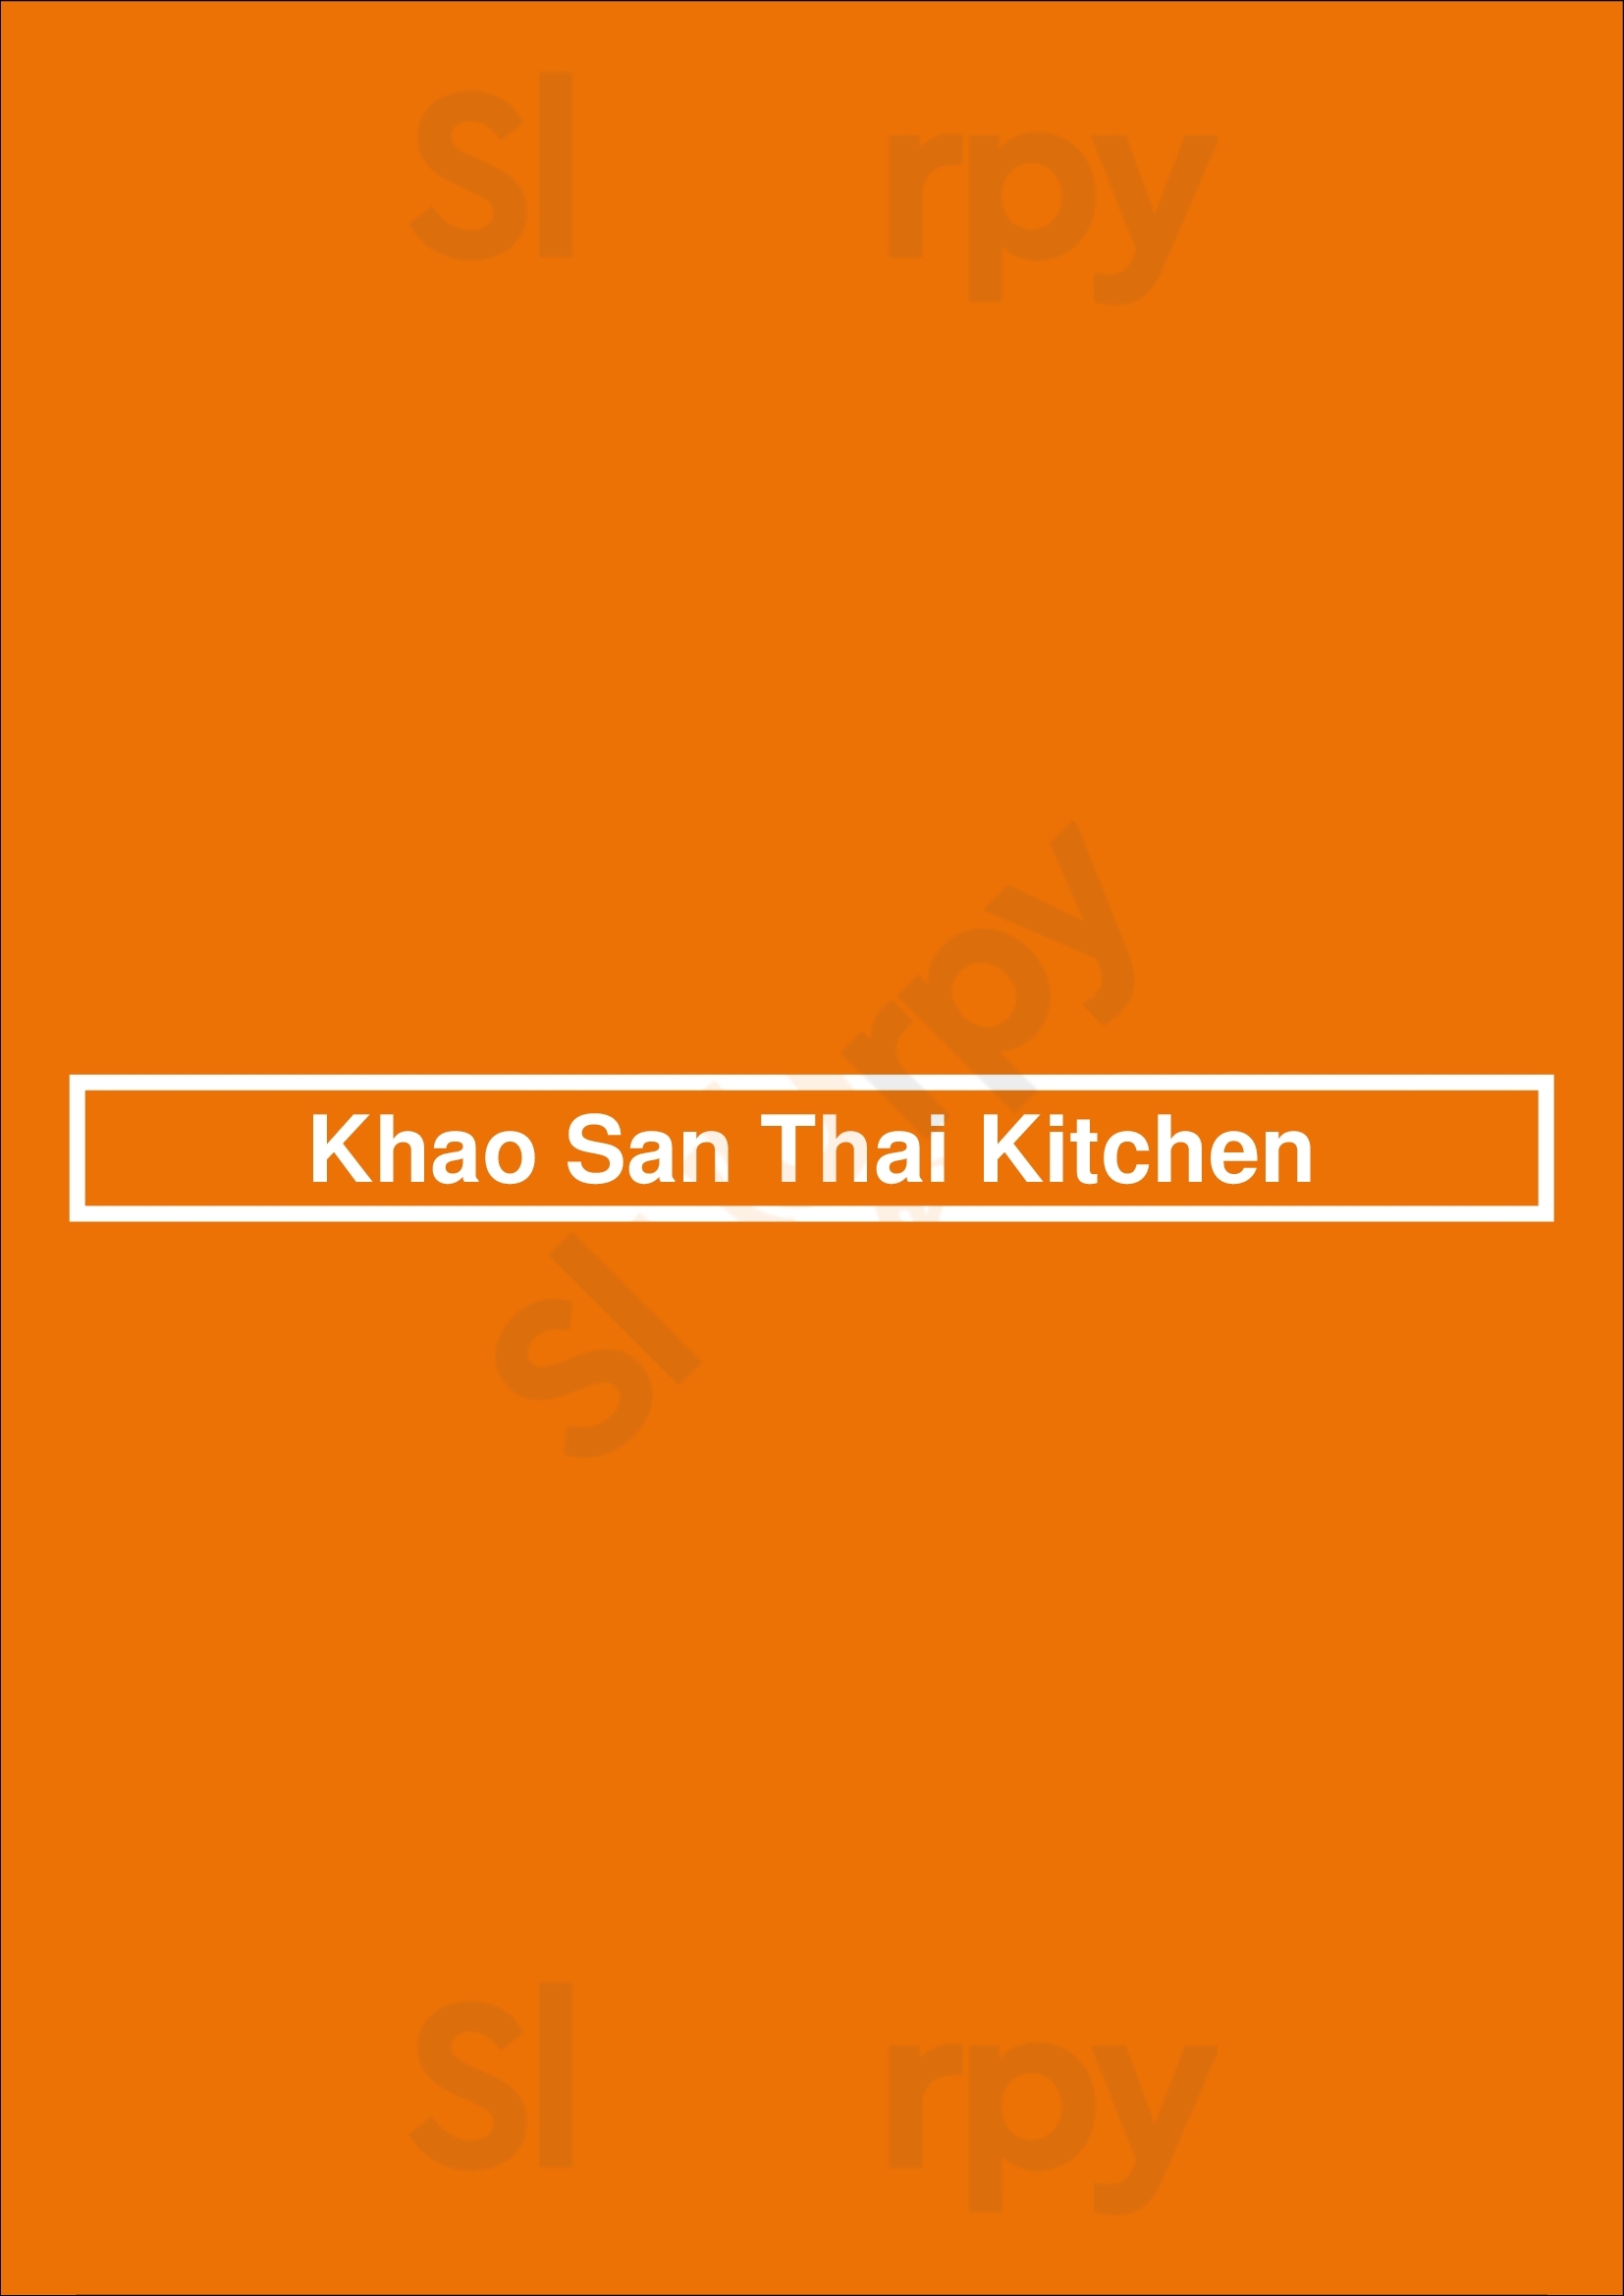 Khao San Thai Kitchen Calgary Menu - 1